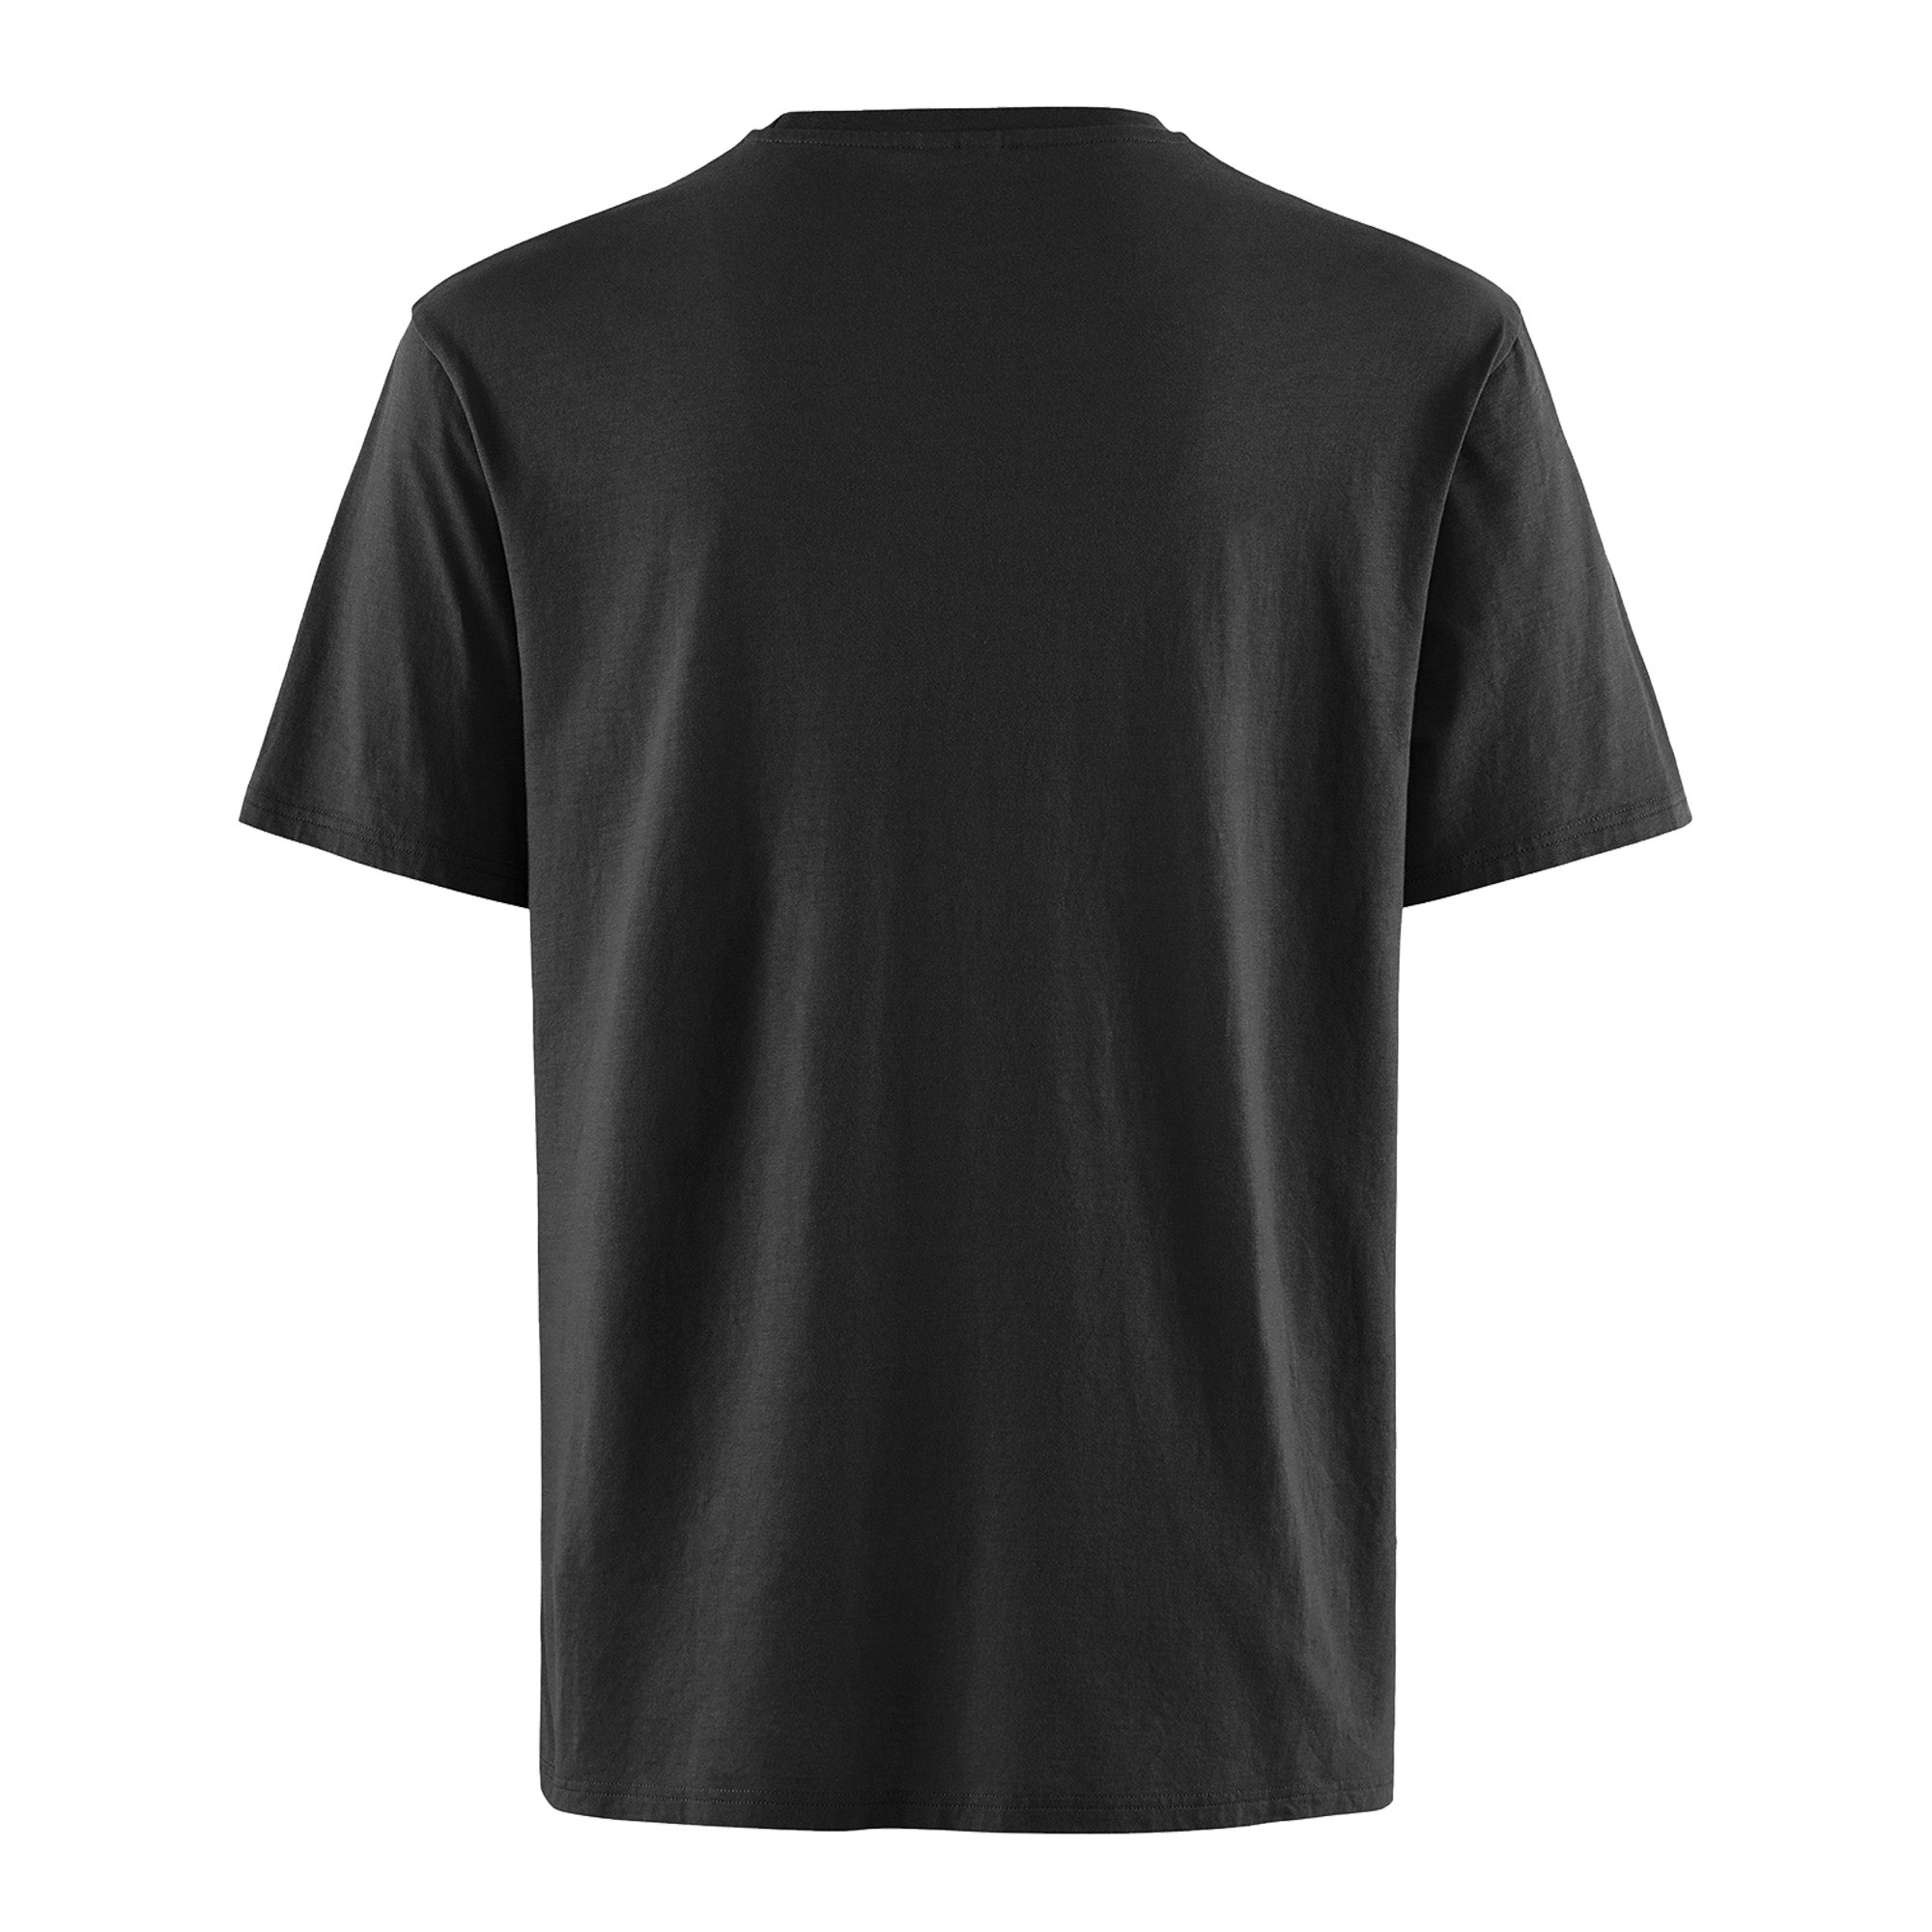 S/S POCKET TEE NATSUKIサマーウォーズ 黒LTシャツ/カットソー(半袖/袖なし)